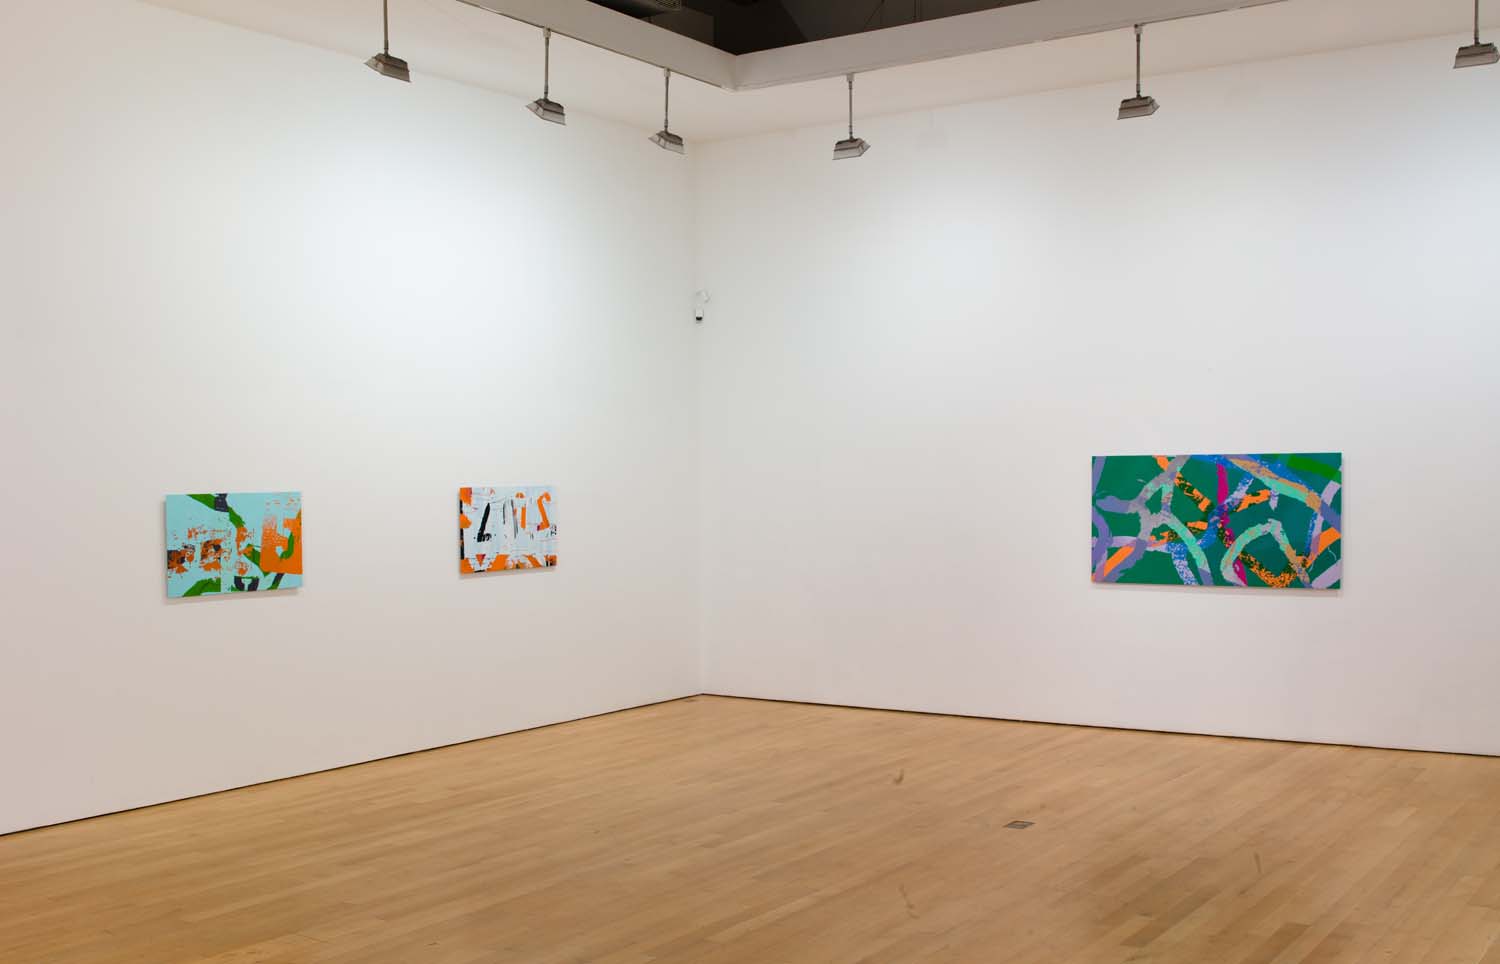   “Ingrid Calame: Swing Shift," James Cohan Gallery, New York, NY, 2010